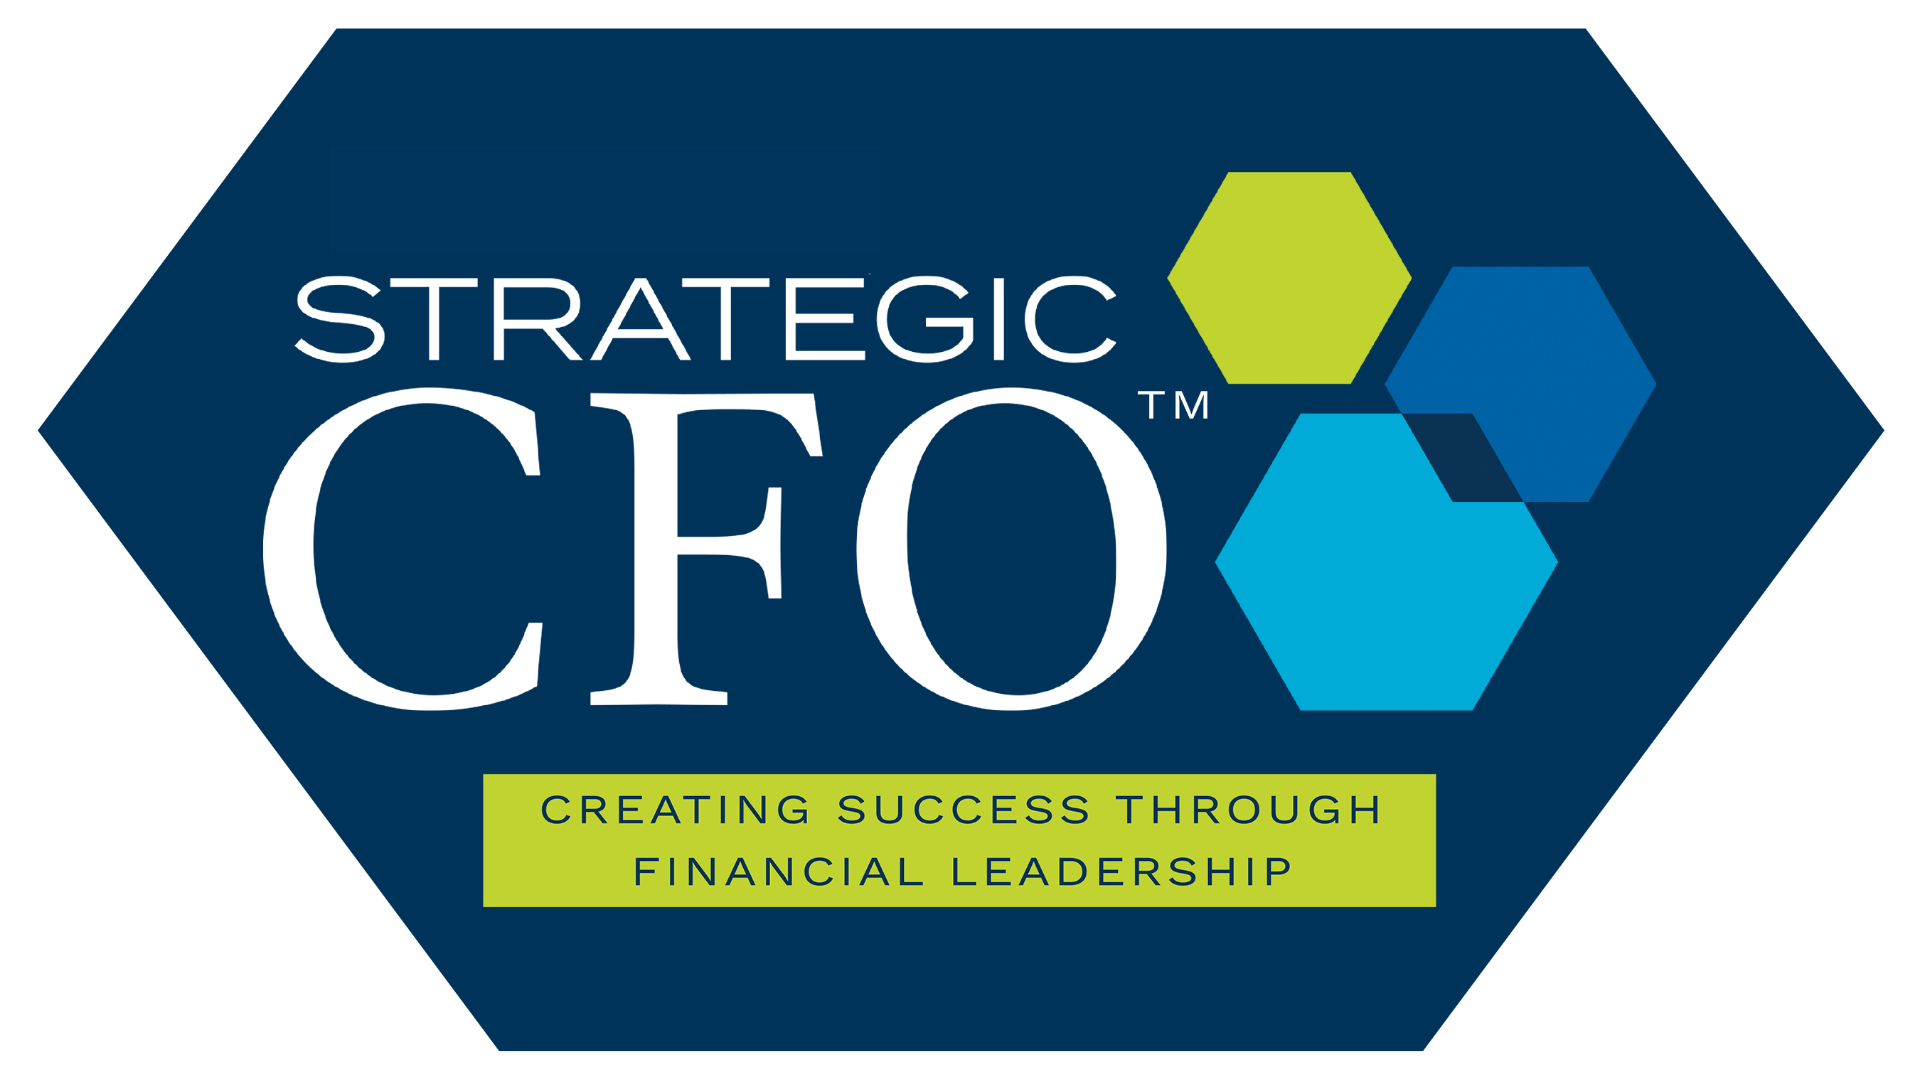 Strategic CFO logo with tagline Financial Leadership